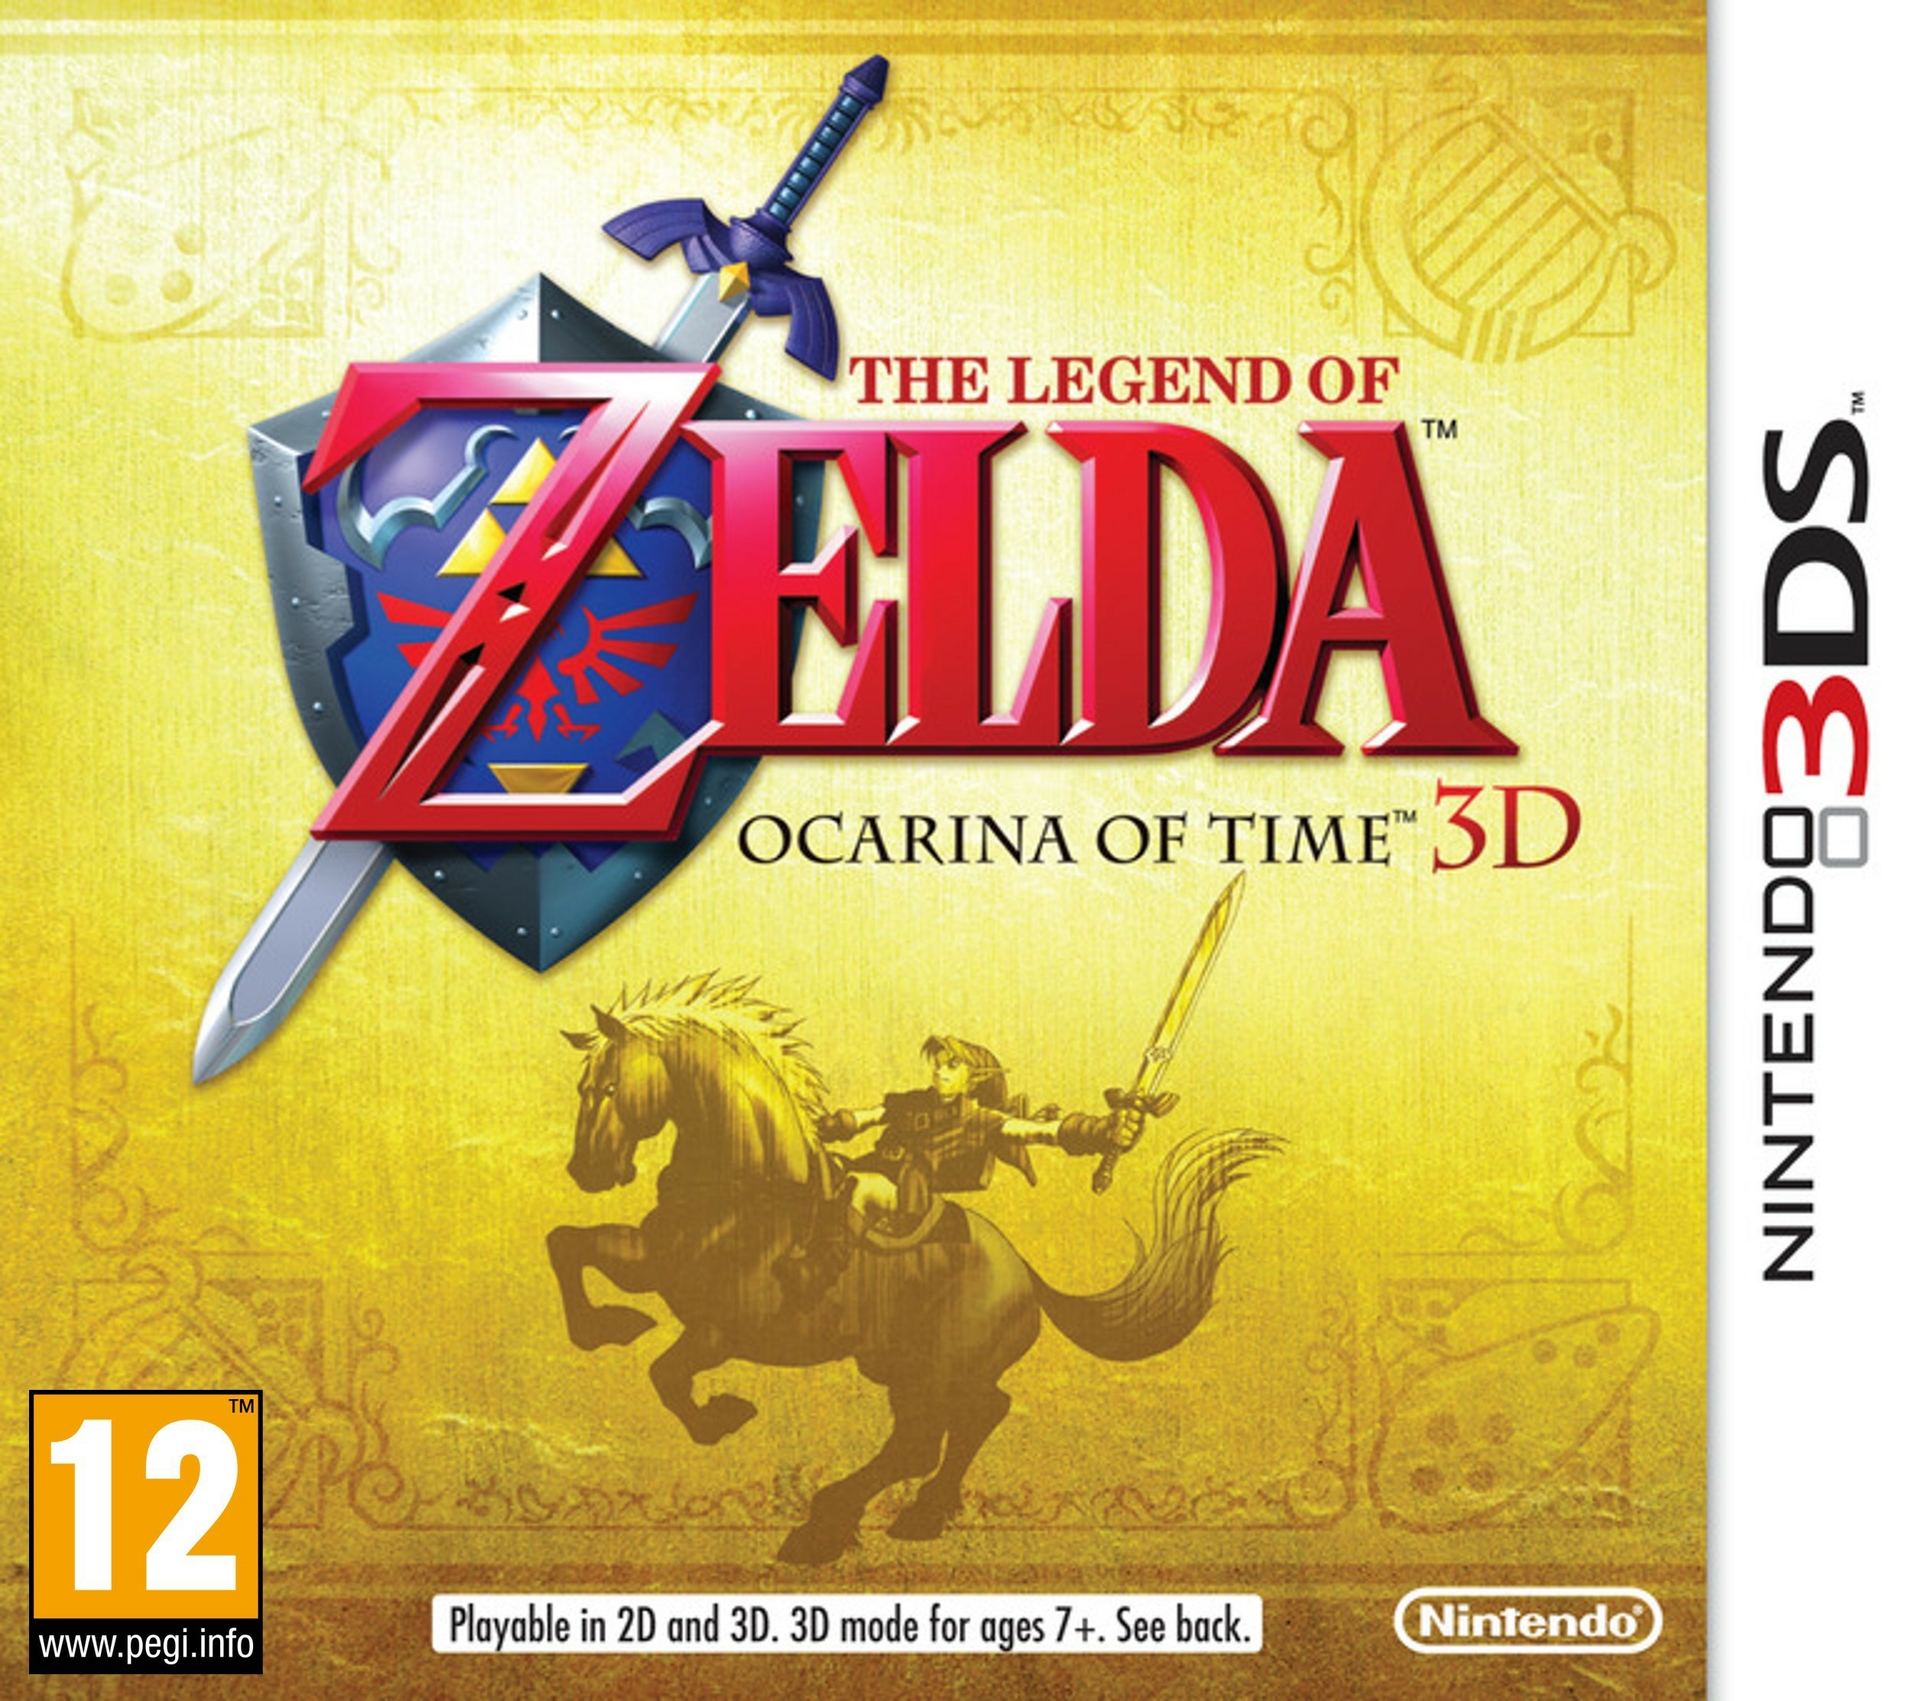 The Legend of Zelda - Ocarina of Time 3D (Golden Art Work) - Nintendo 3DS Games